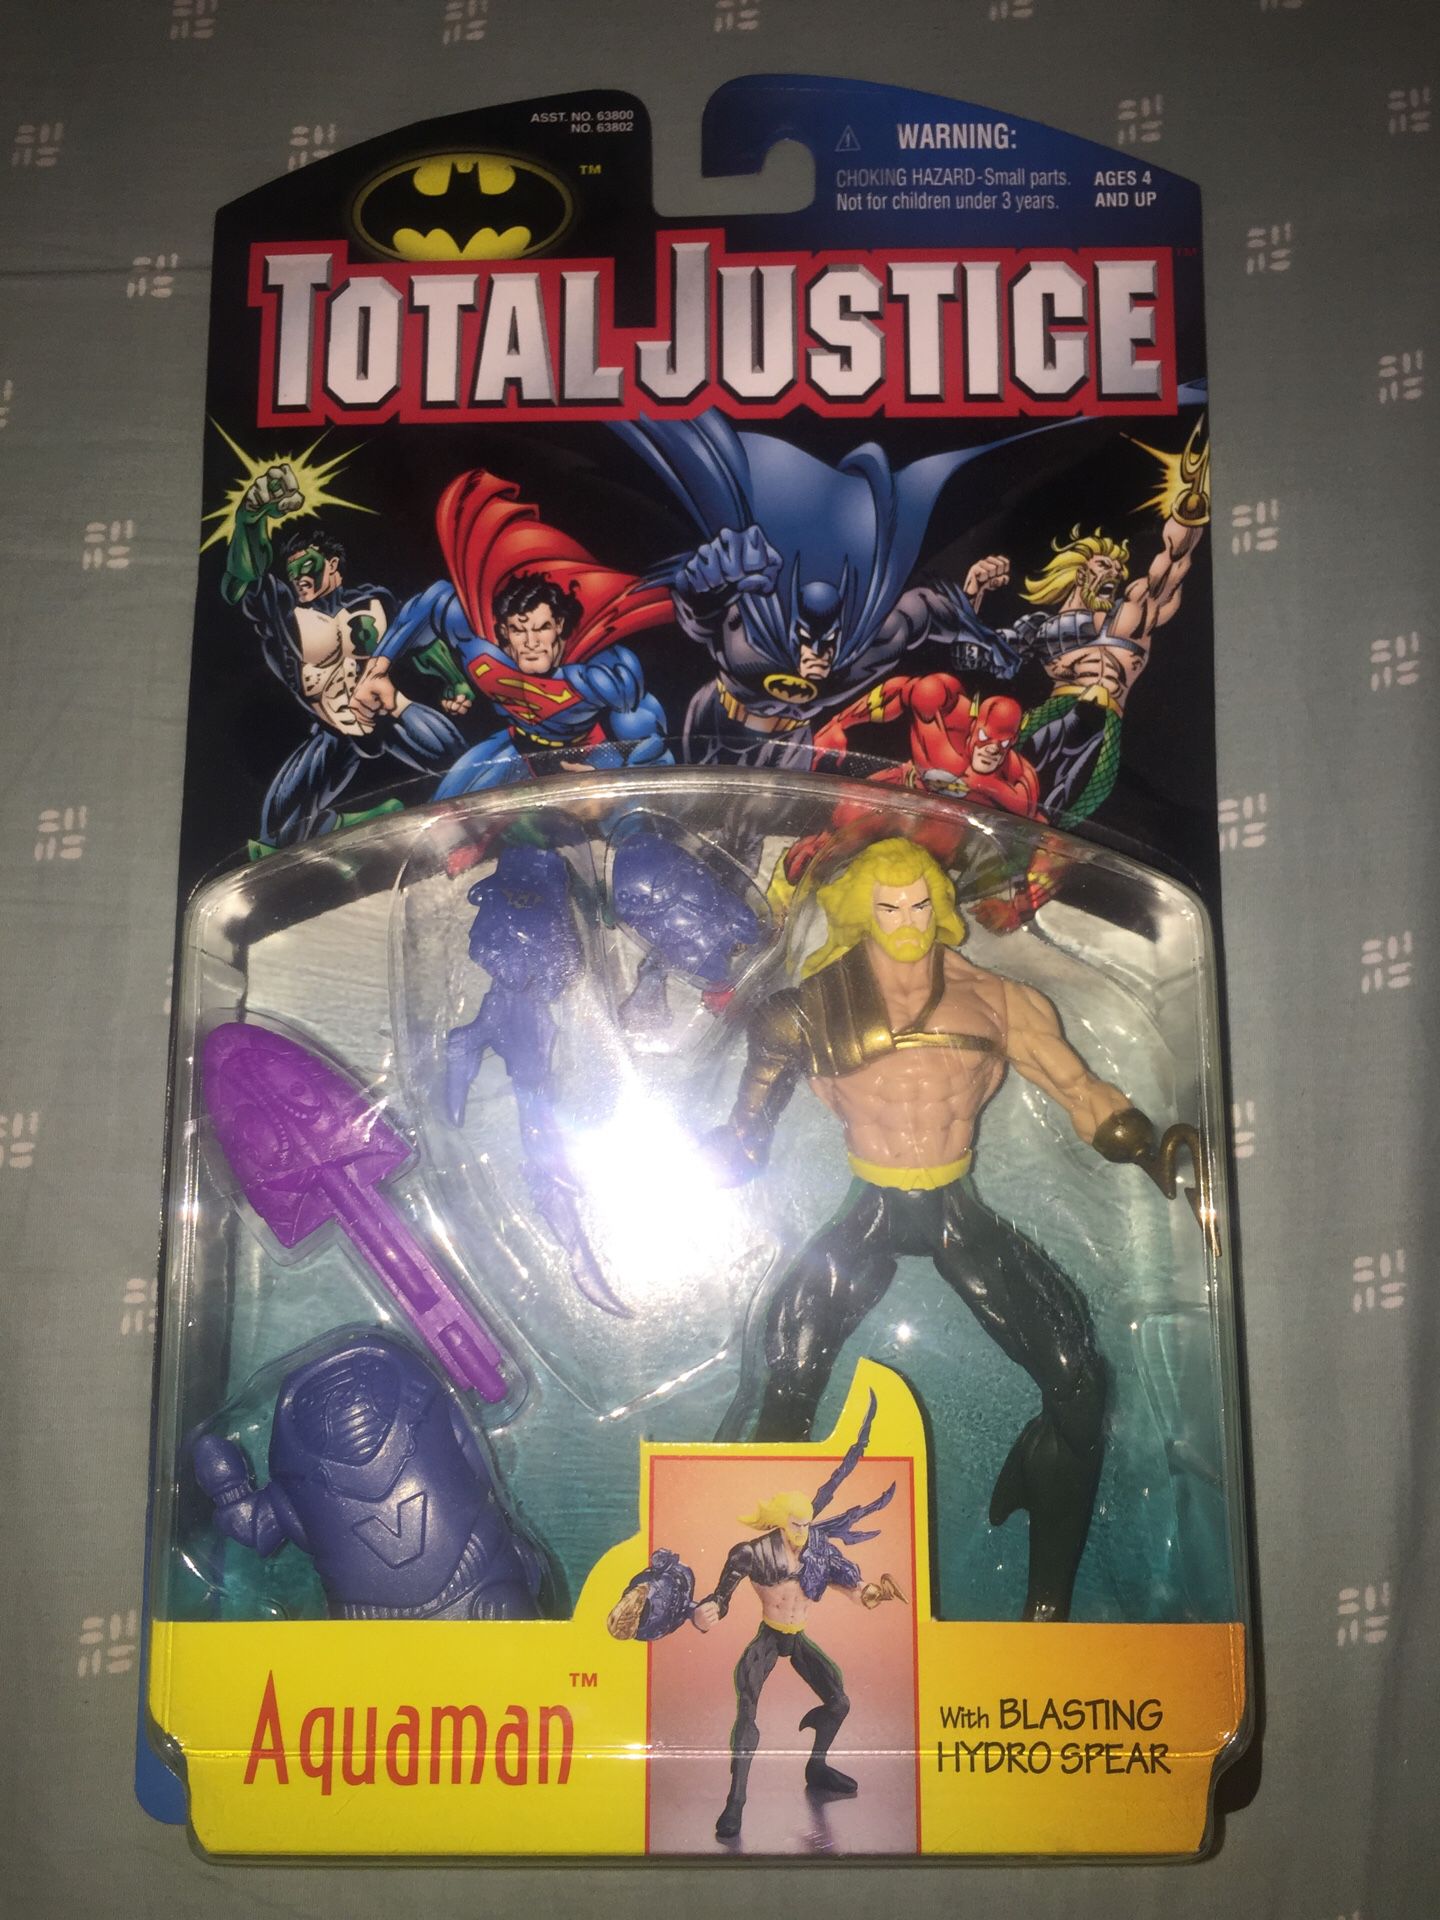 Aquaman Total Justice action figure